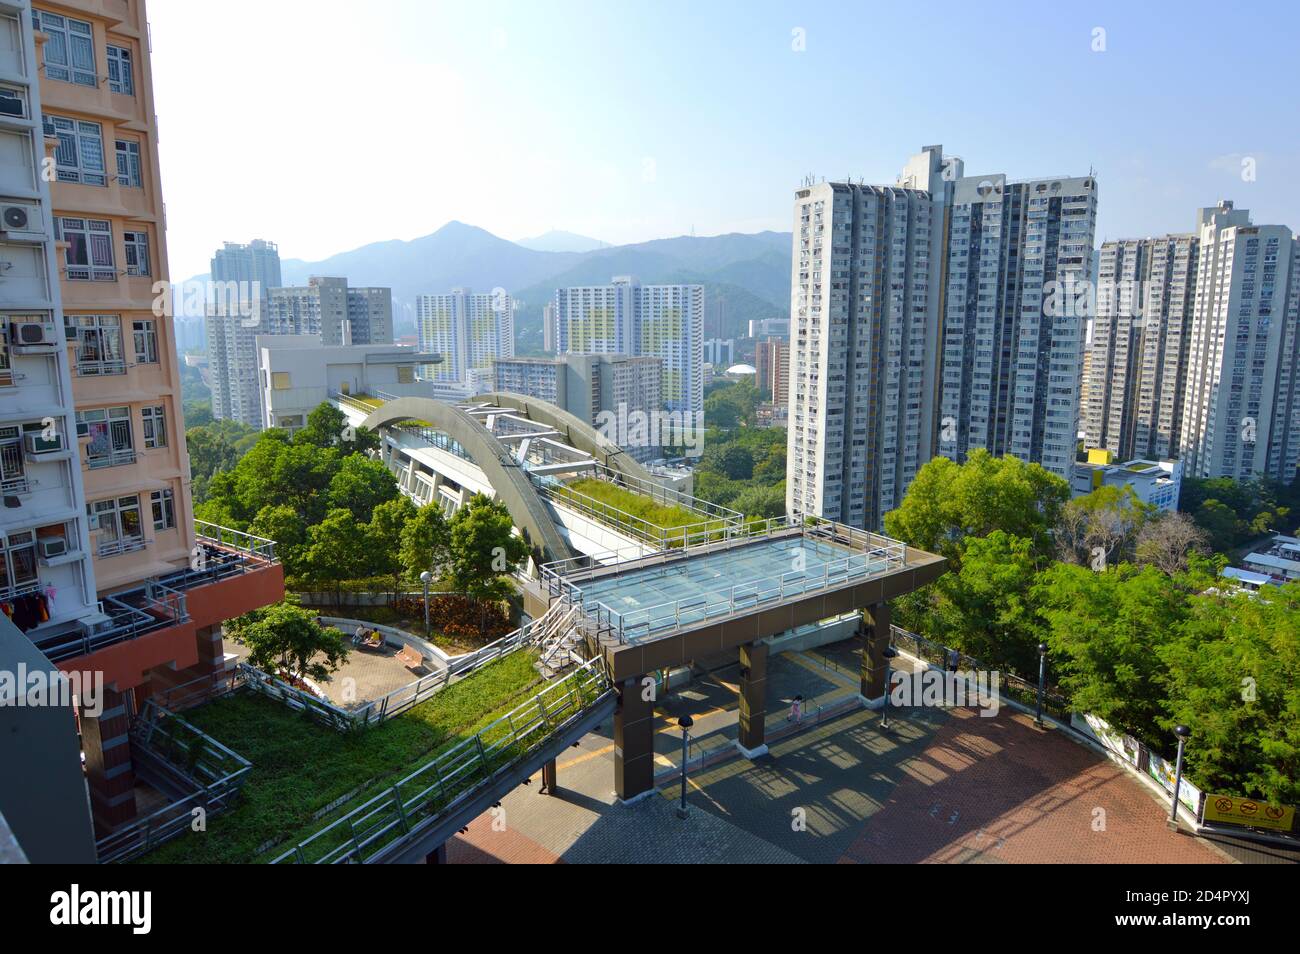 Access bridge and lift tower for Shui Chuen O Estate, Hong Kong Stock Photo